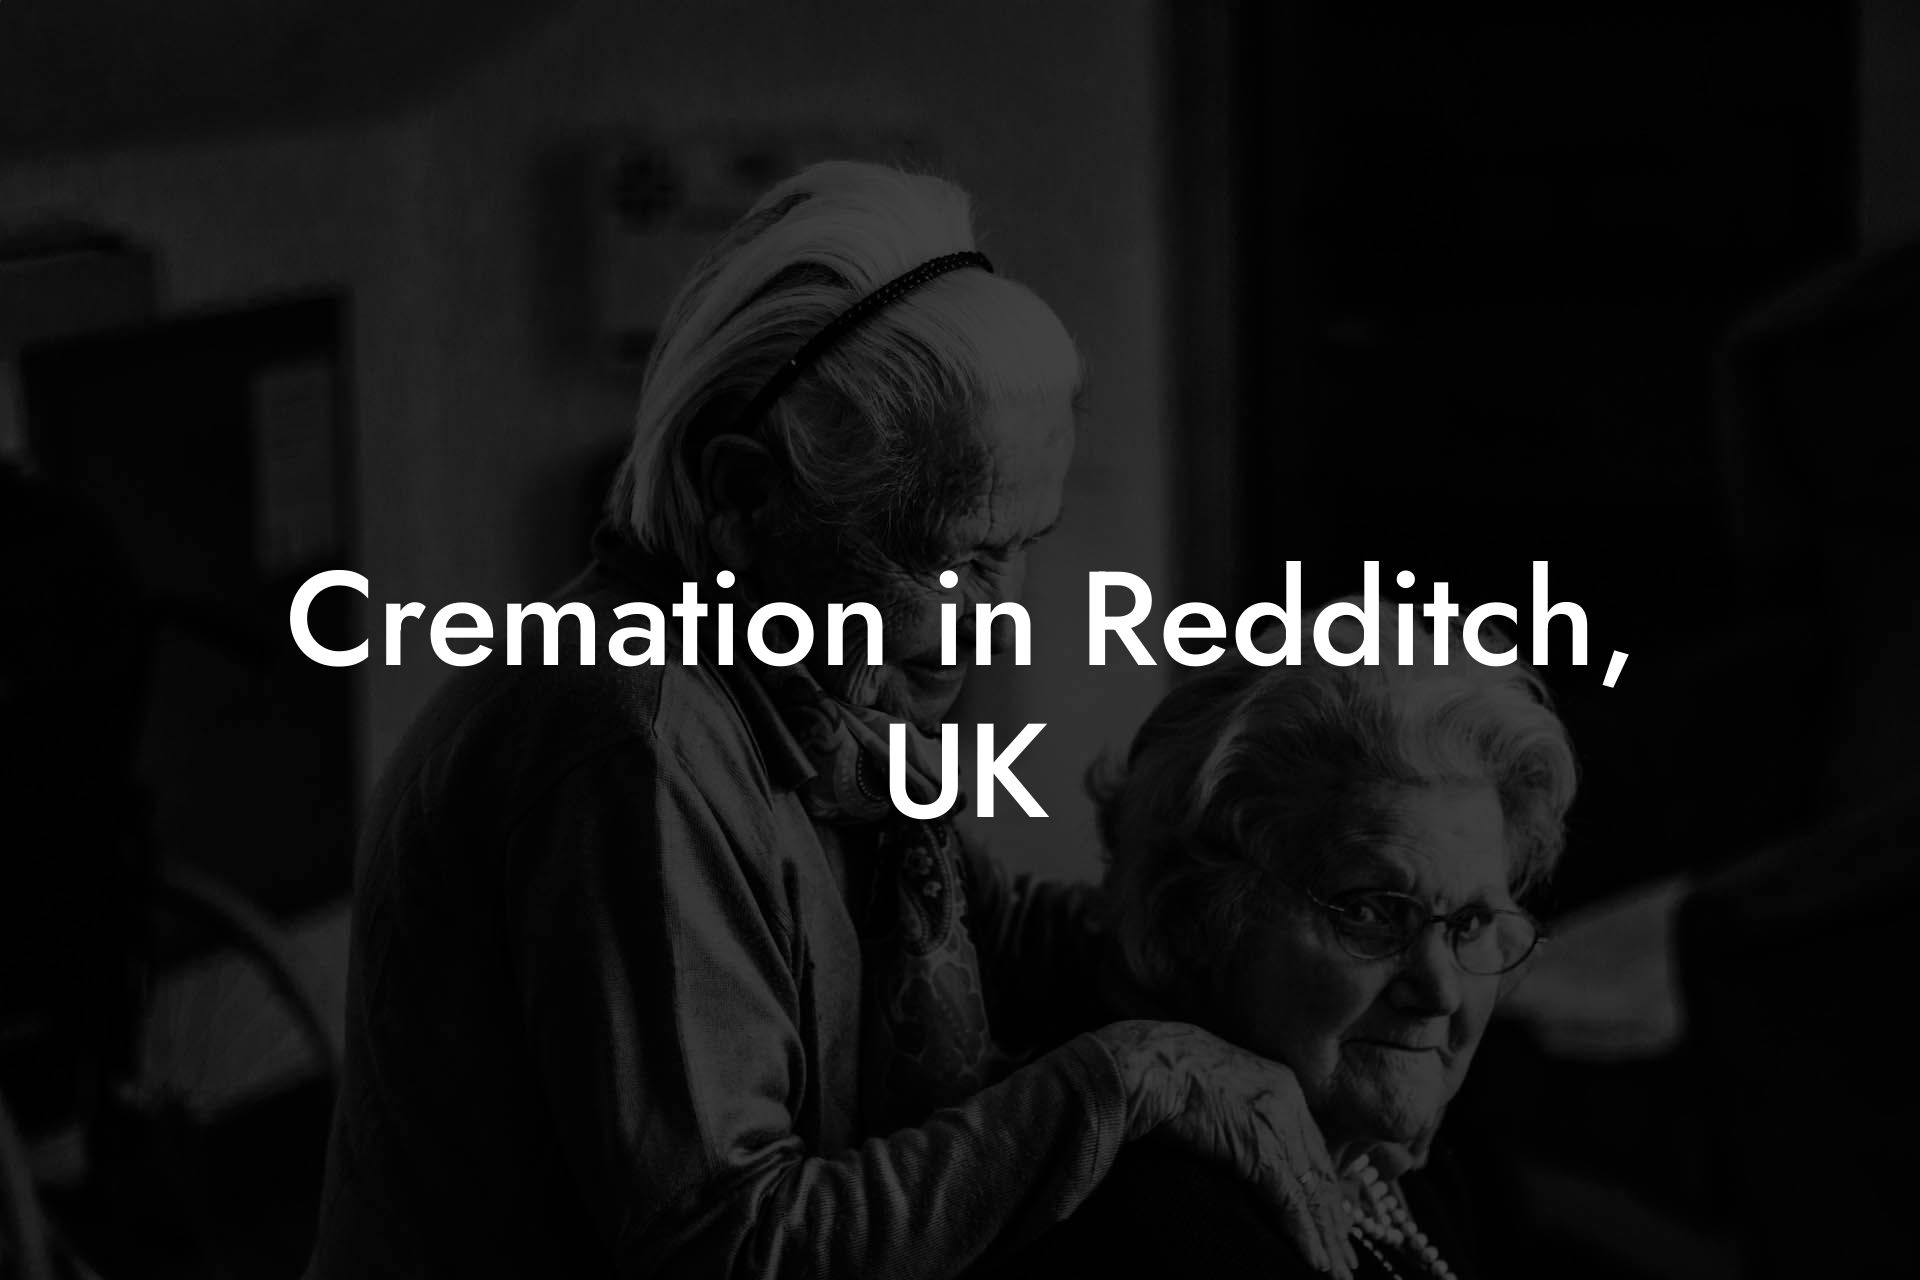 Cremation in Redditch, UK